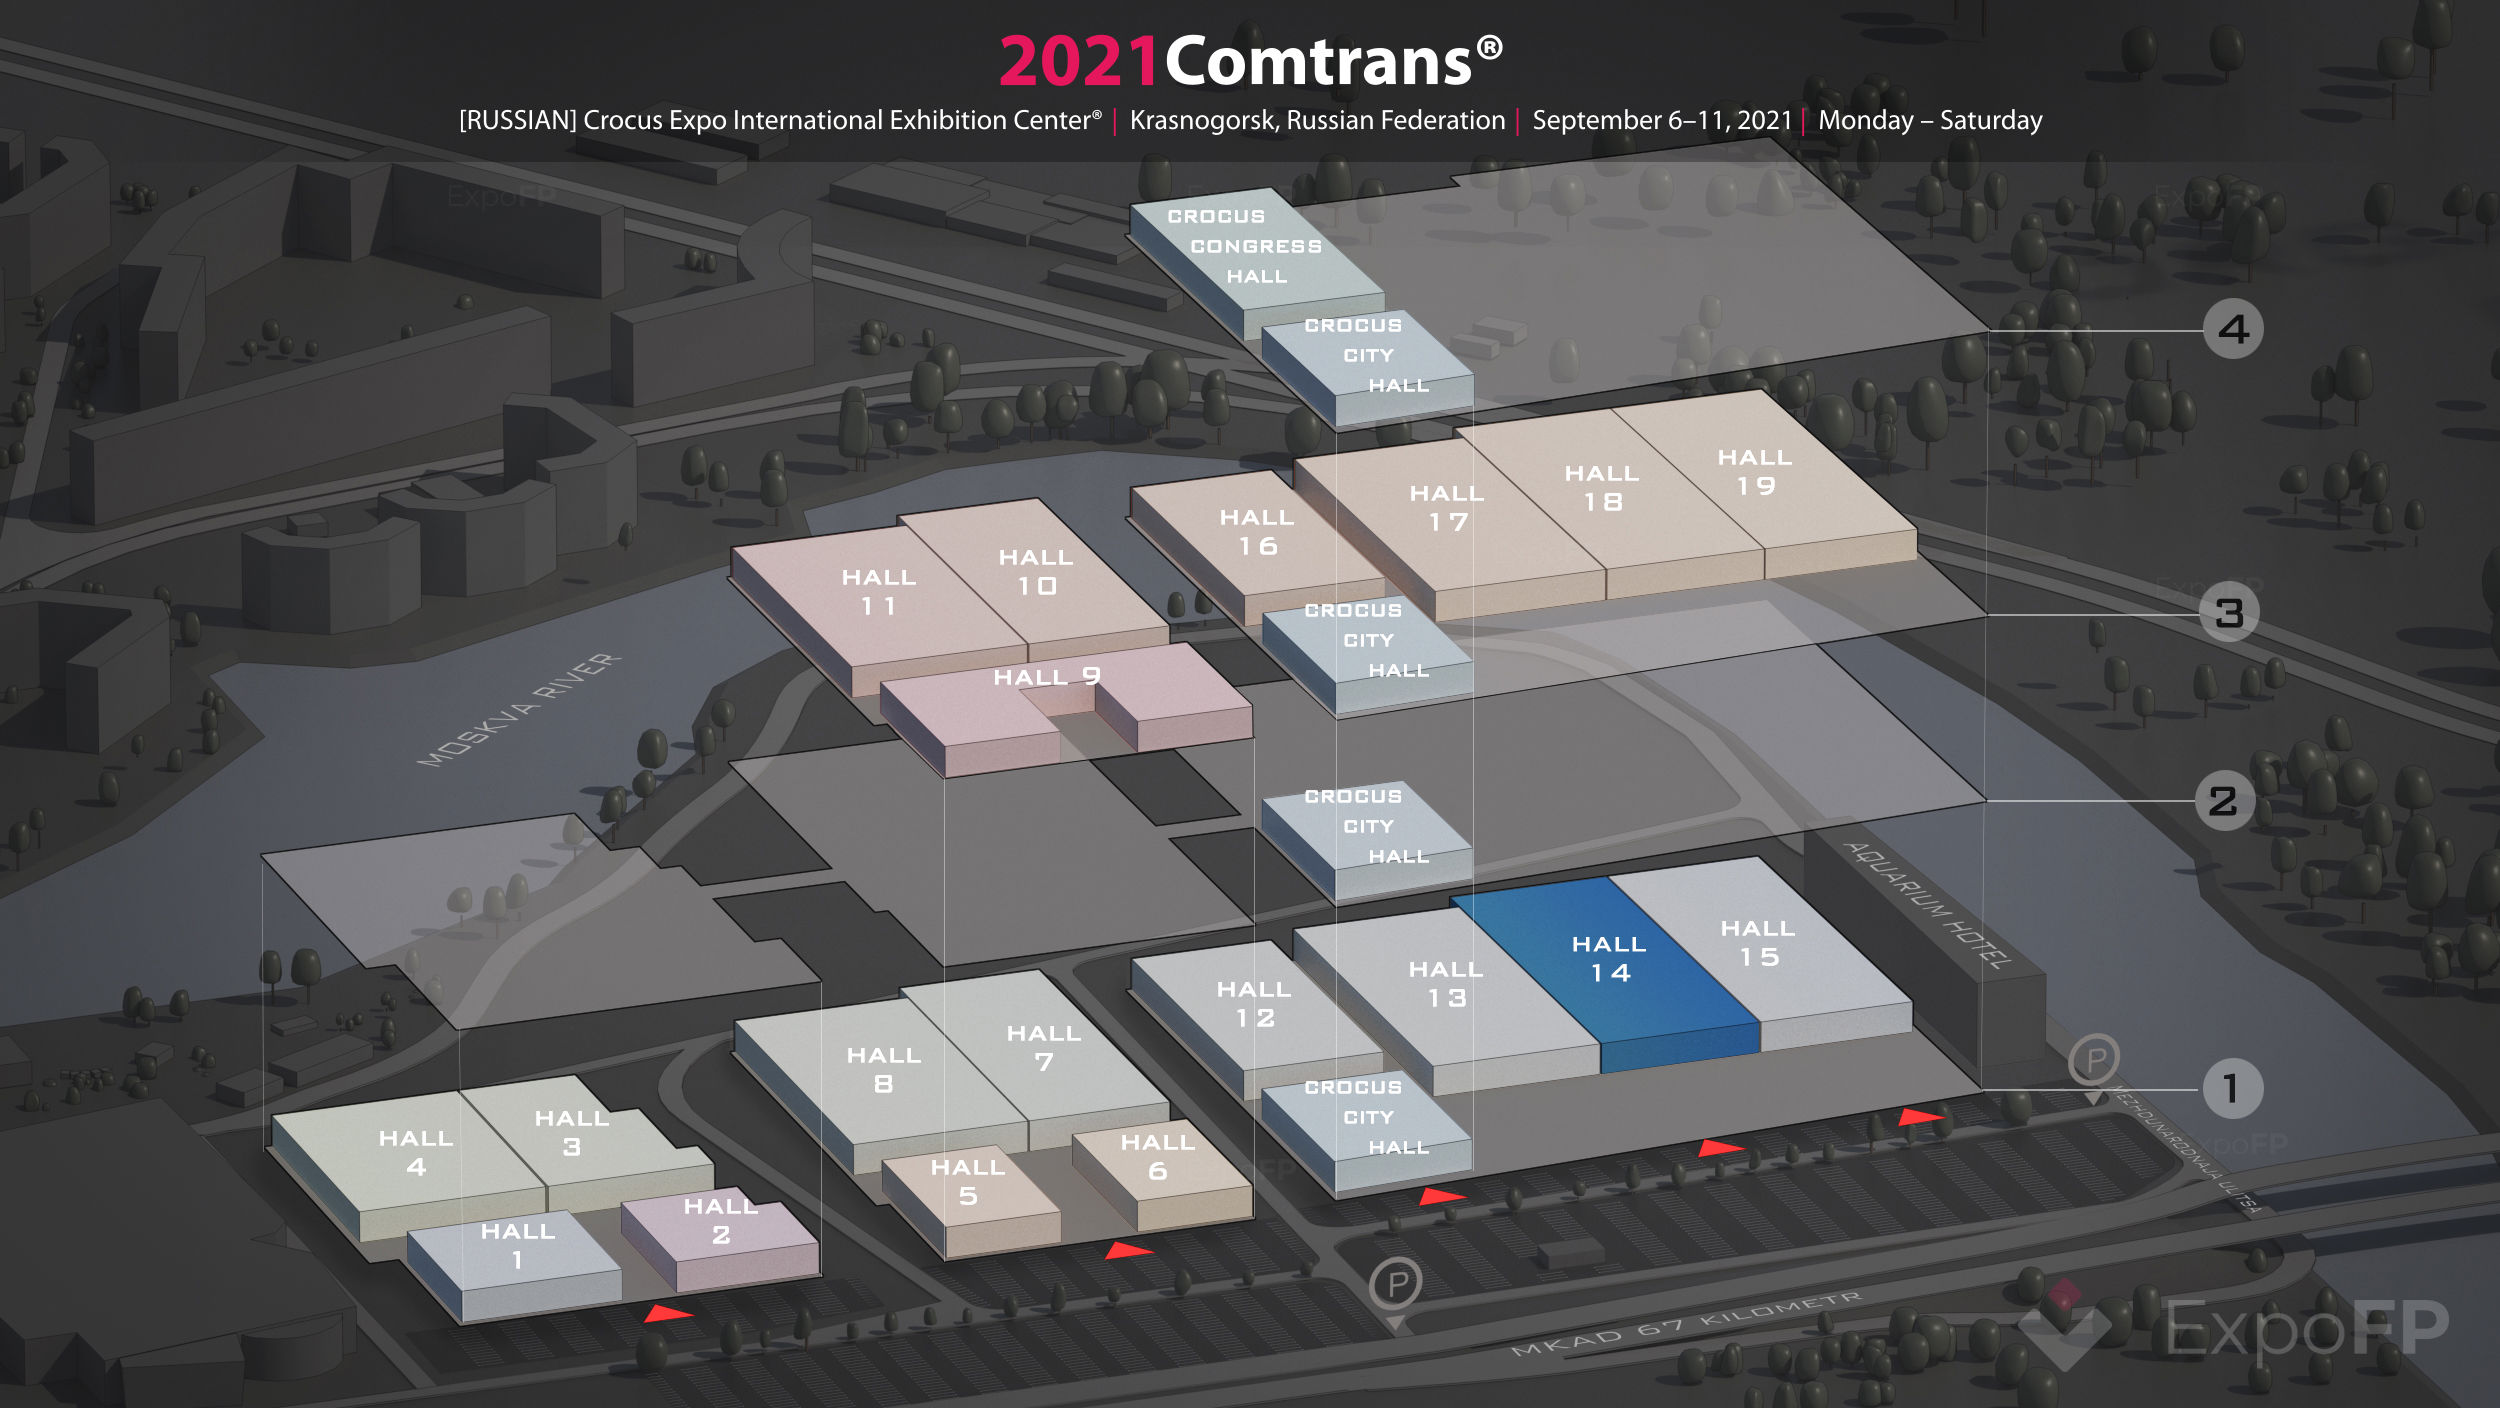  Трехмерный план этажа Comtrans 2021 